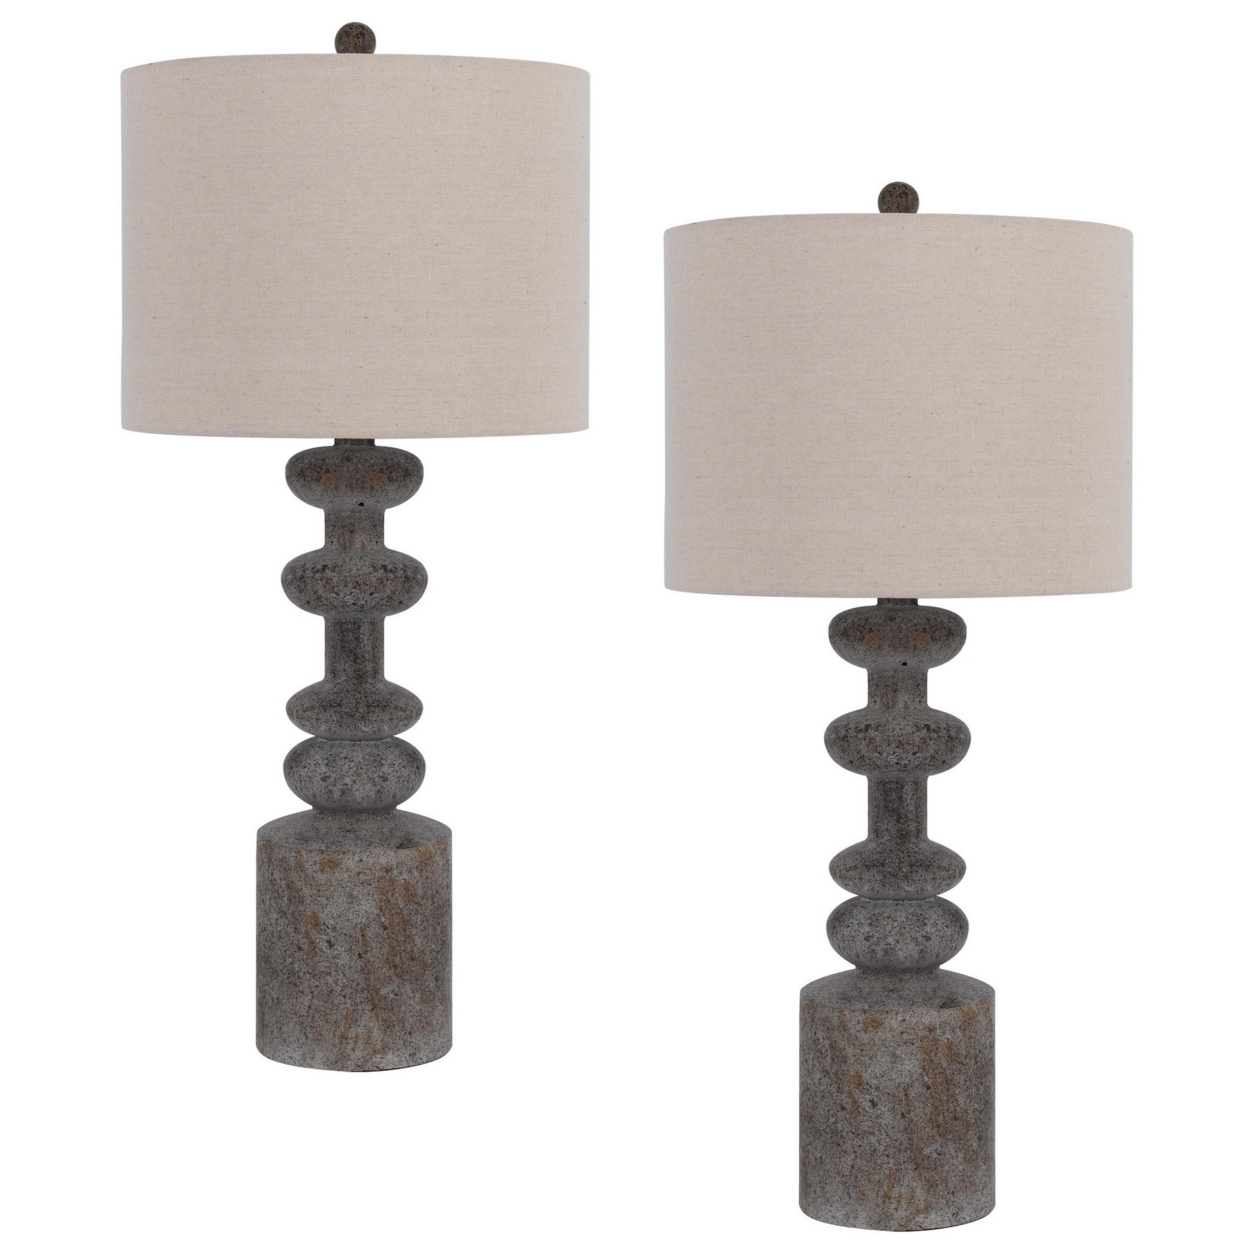 31 Inch Accent Table Lamp, Resin Turned Base, Set Of 2, Beige, Gray- Saltoro Sherpi